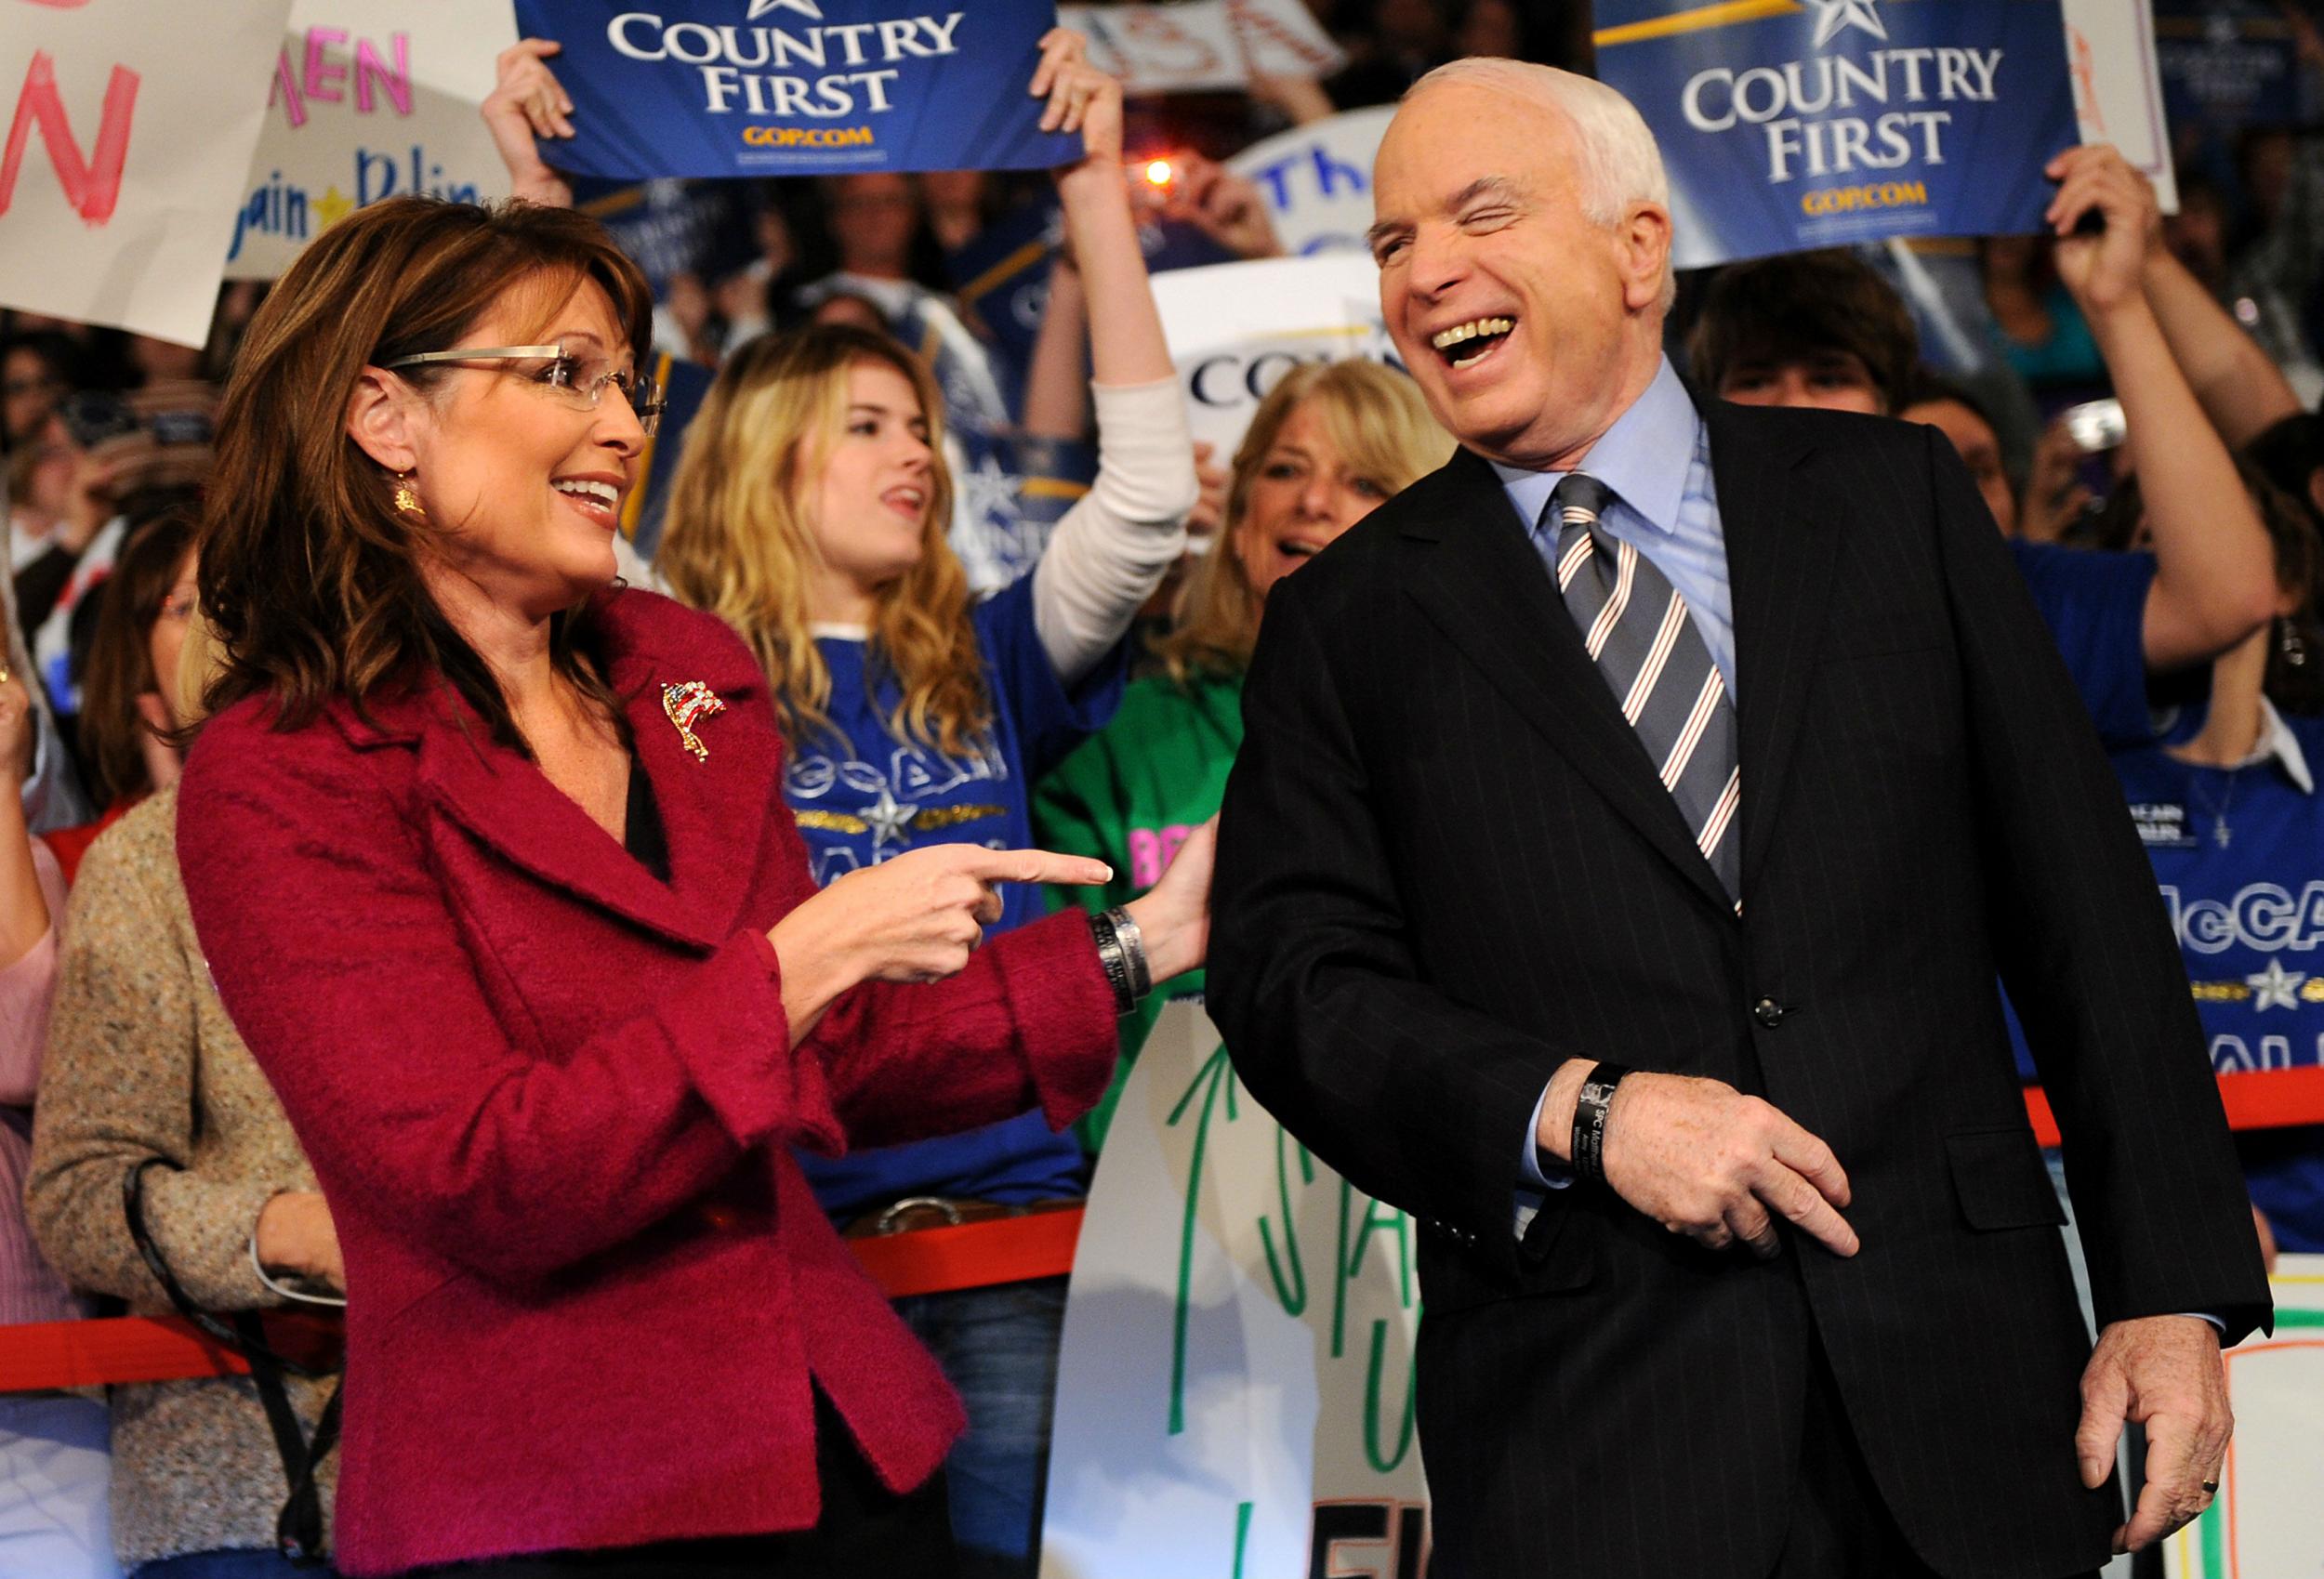 2008 John McCain & Sarah Palin 2-1/4" Pin 09 Presidential Campaign Button 